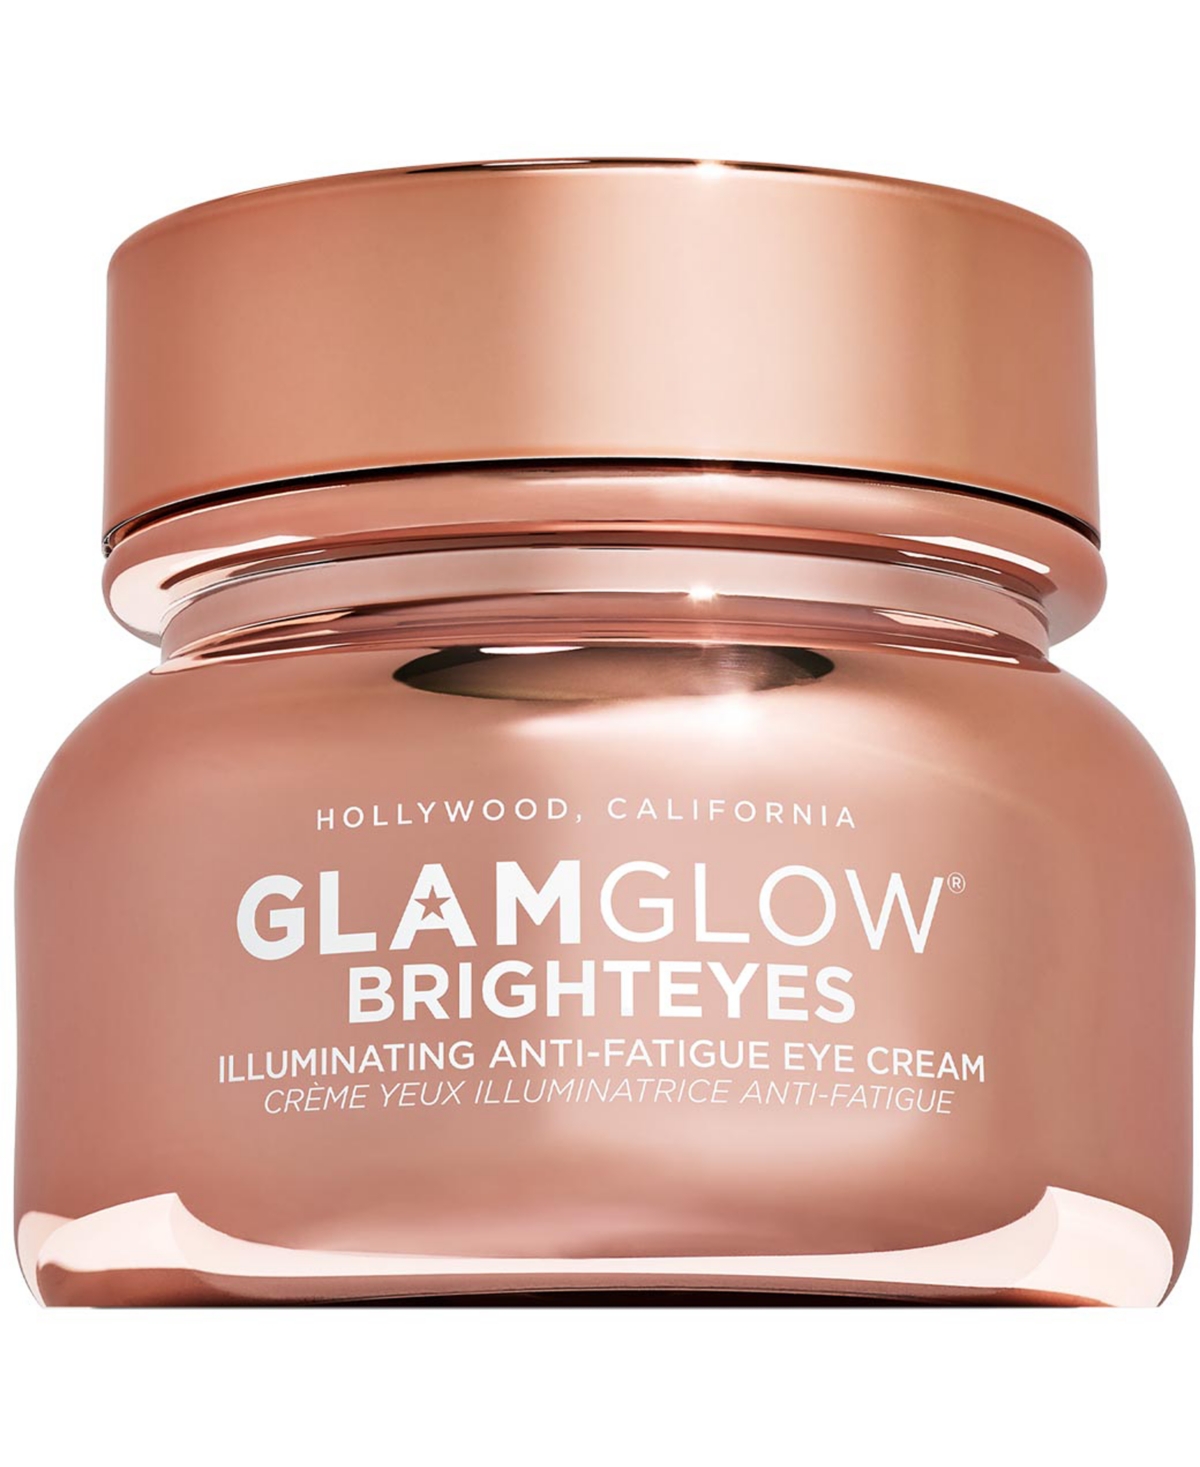 Glamglow Brighteyes Illuminating Anti-Fatigue Eye Cream, 0.5-oz.